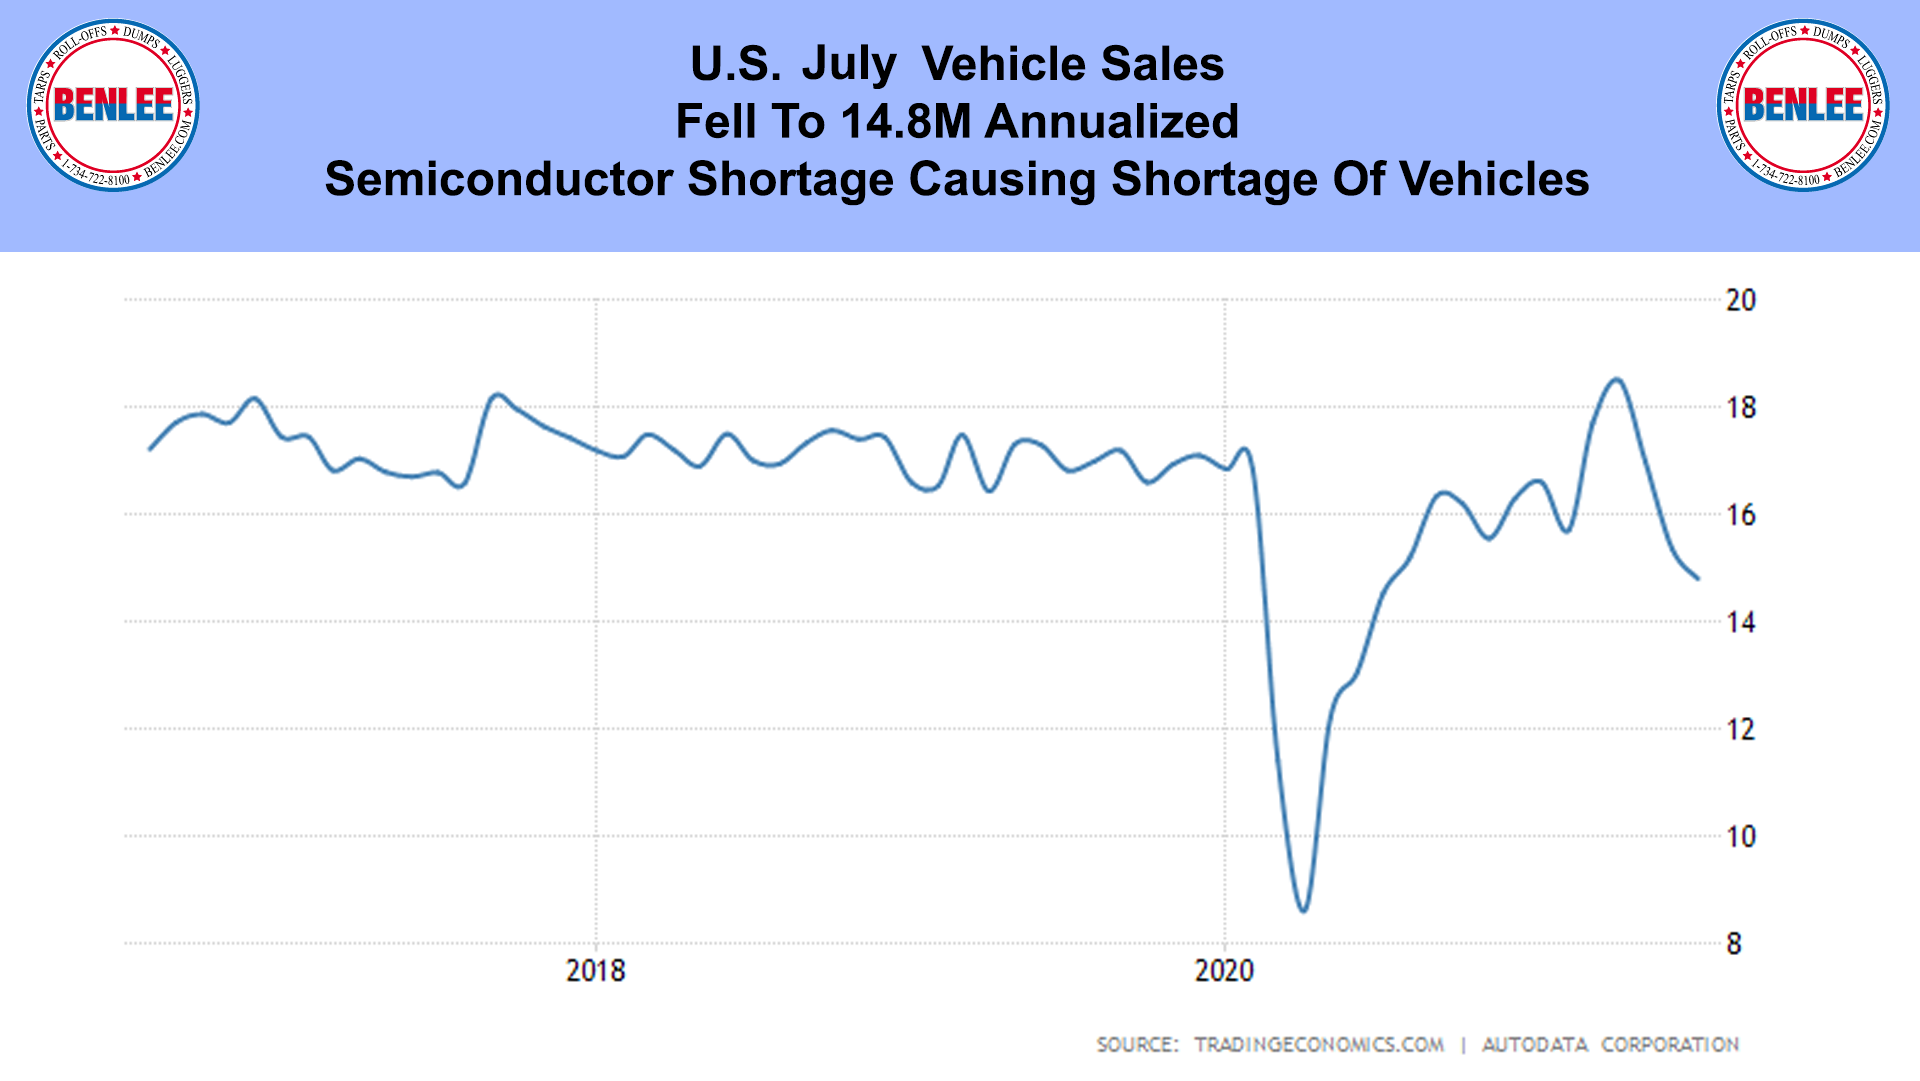 U.S. July Vehicle Sales